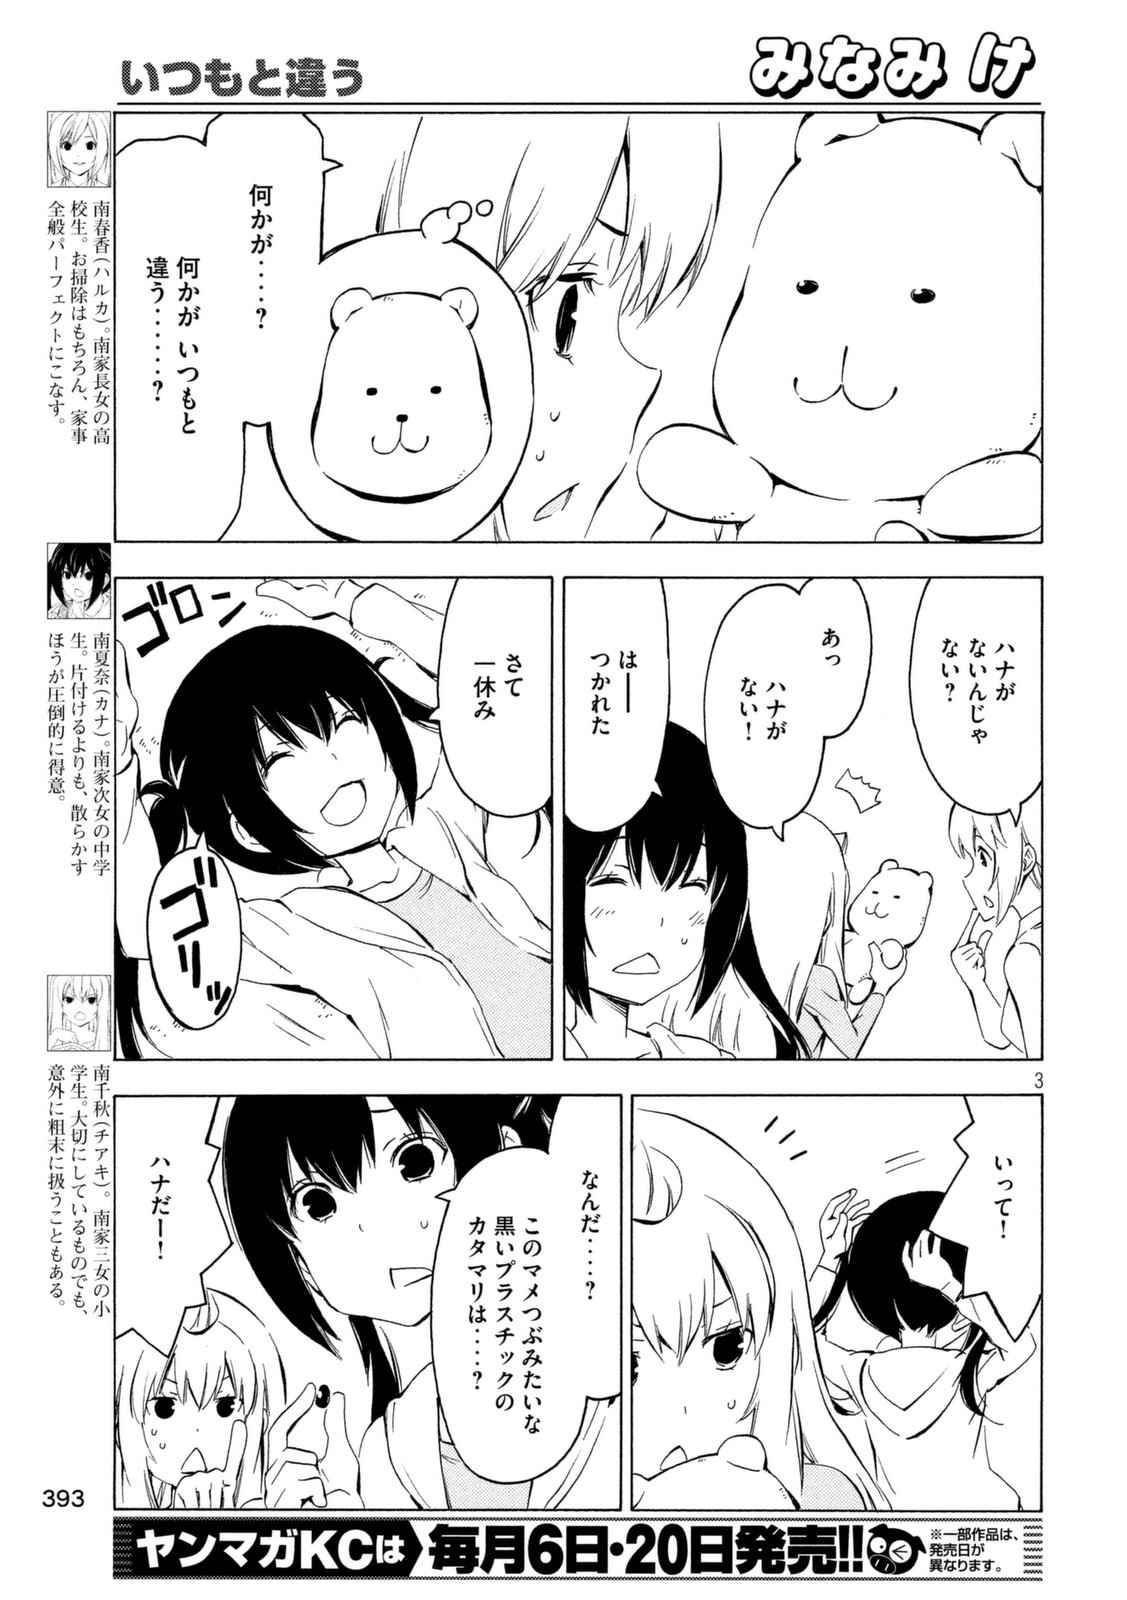 Minami-ke - Chapter 319 - Page 3